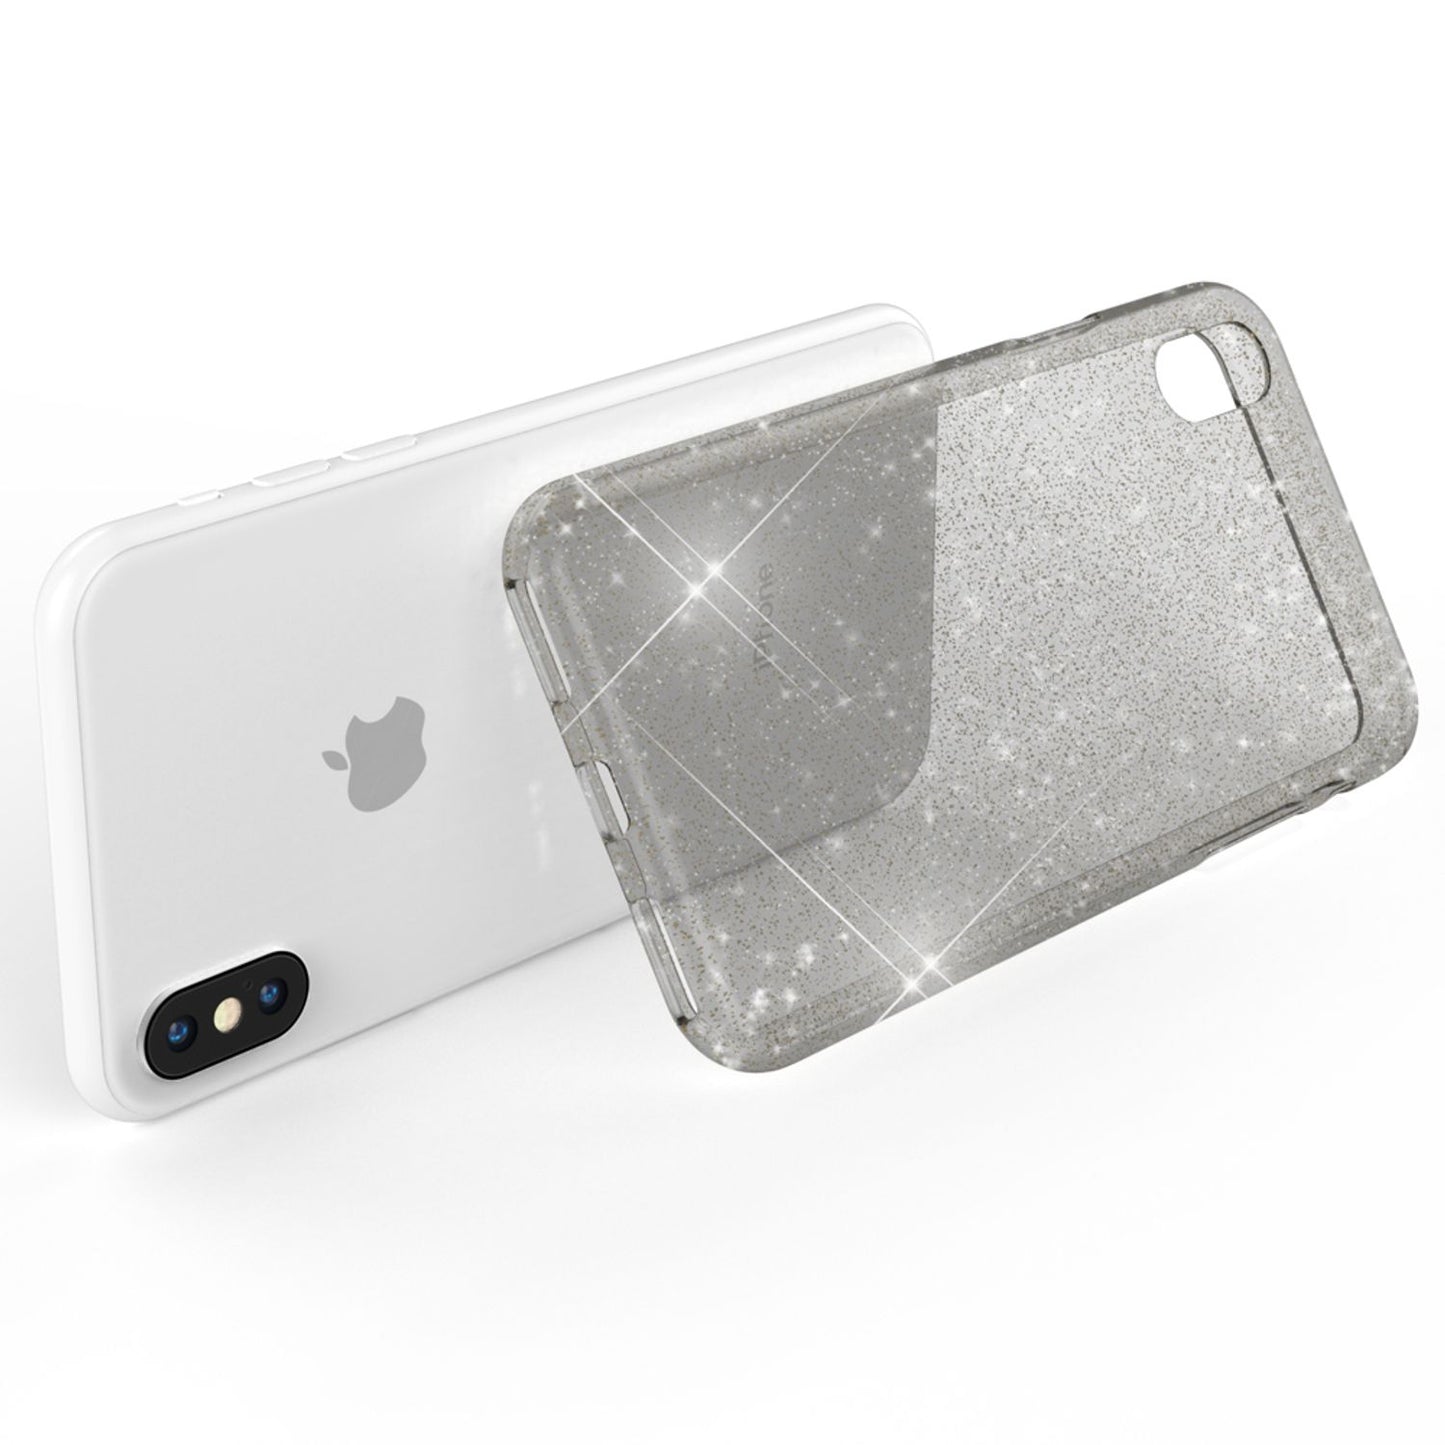 NALIA Handy Hülle für Apple iPhone X XS, Glitzer Case Cover Slim Silikon Bumper